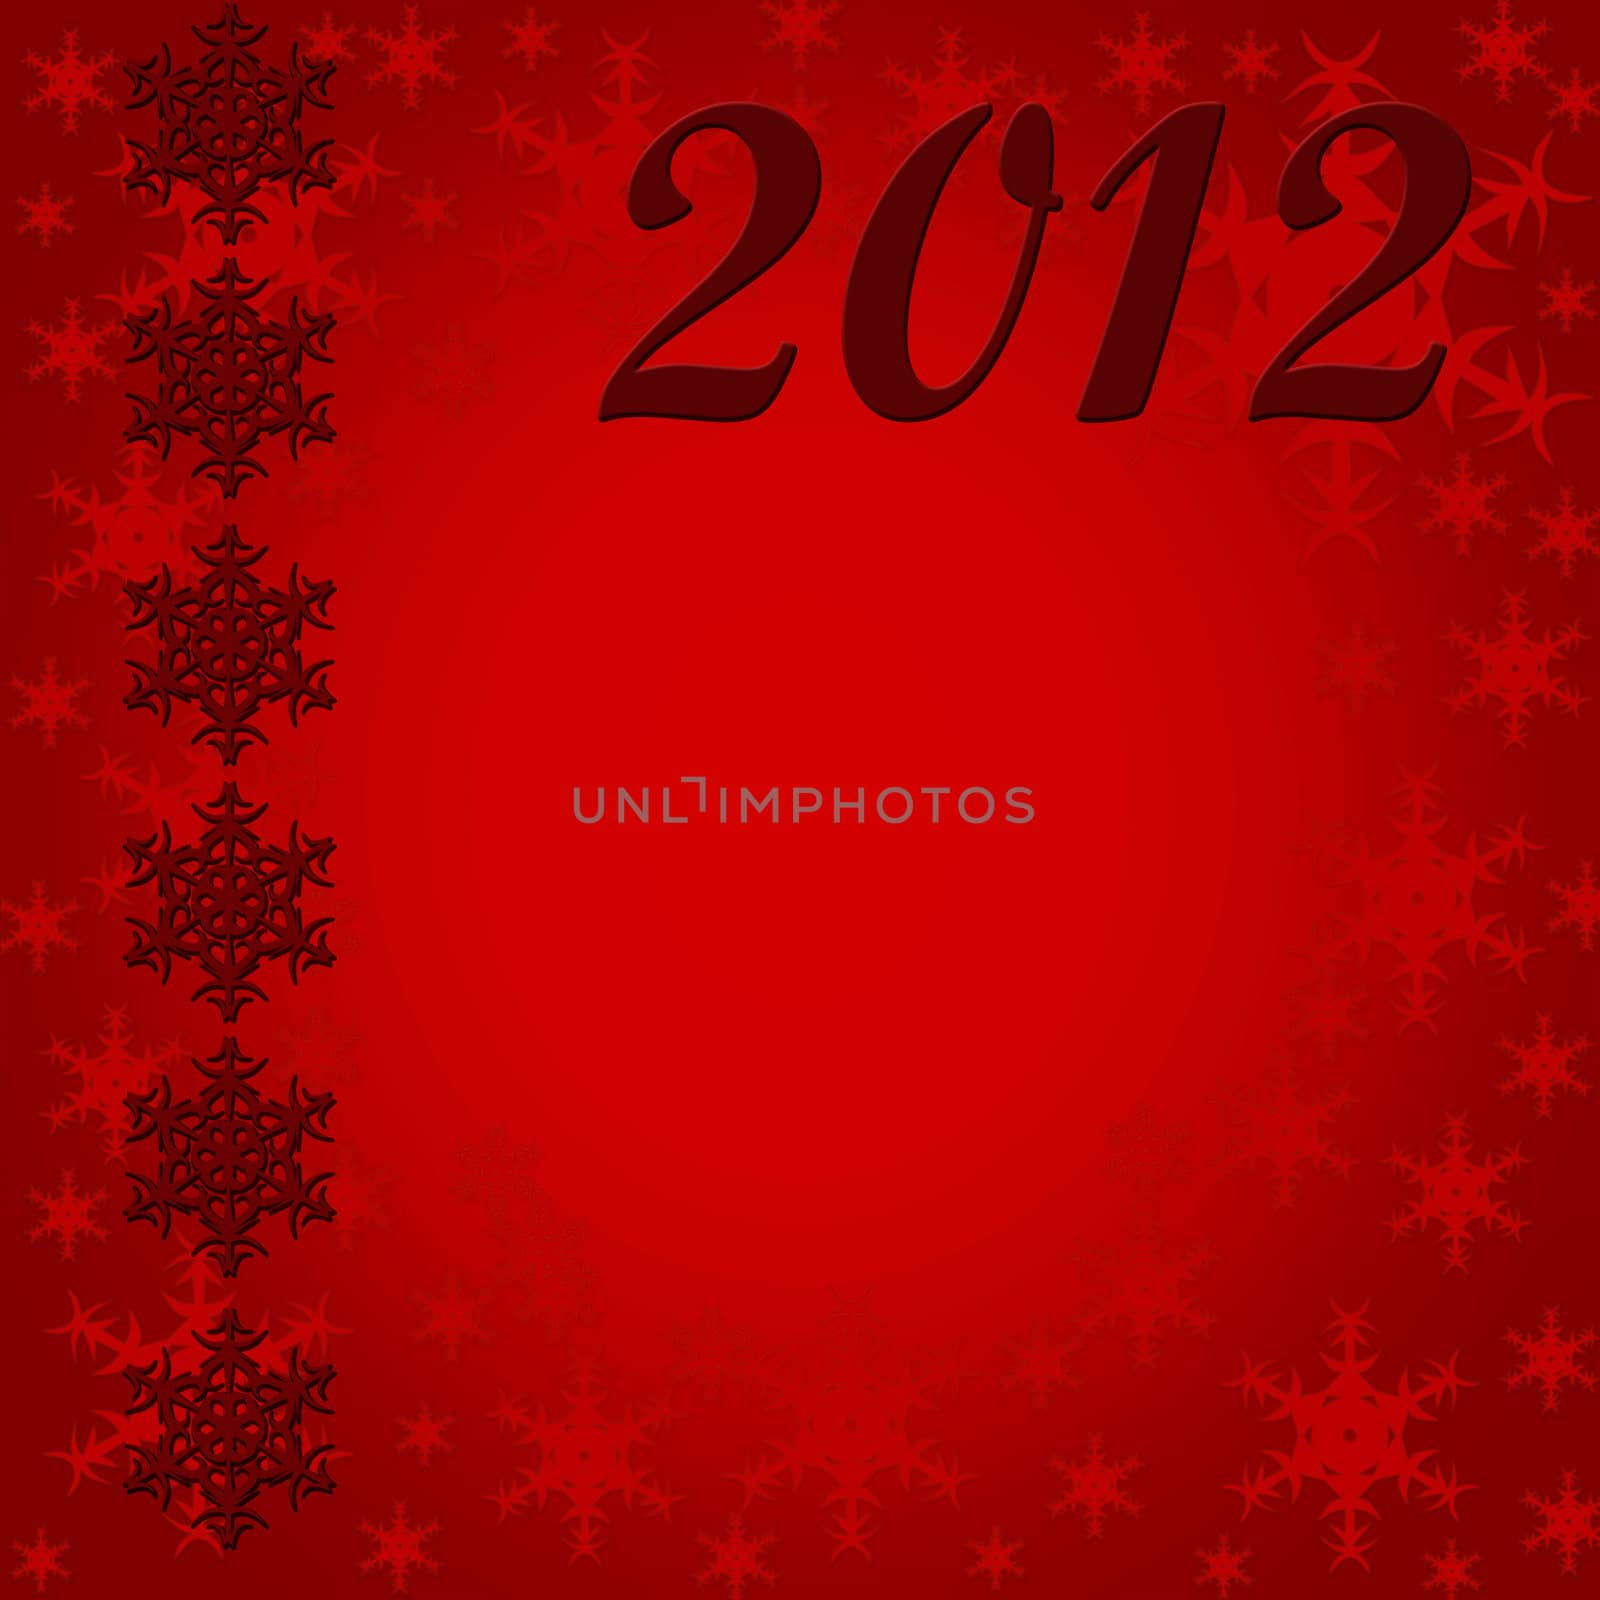 New year by alena0509